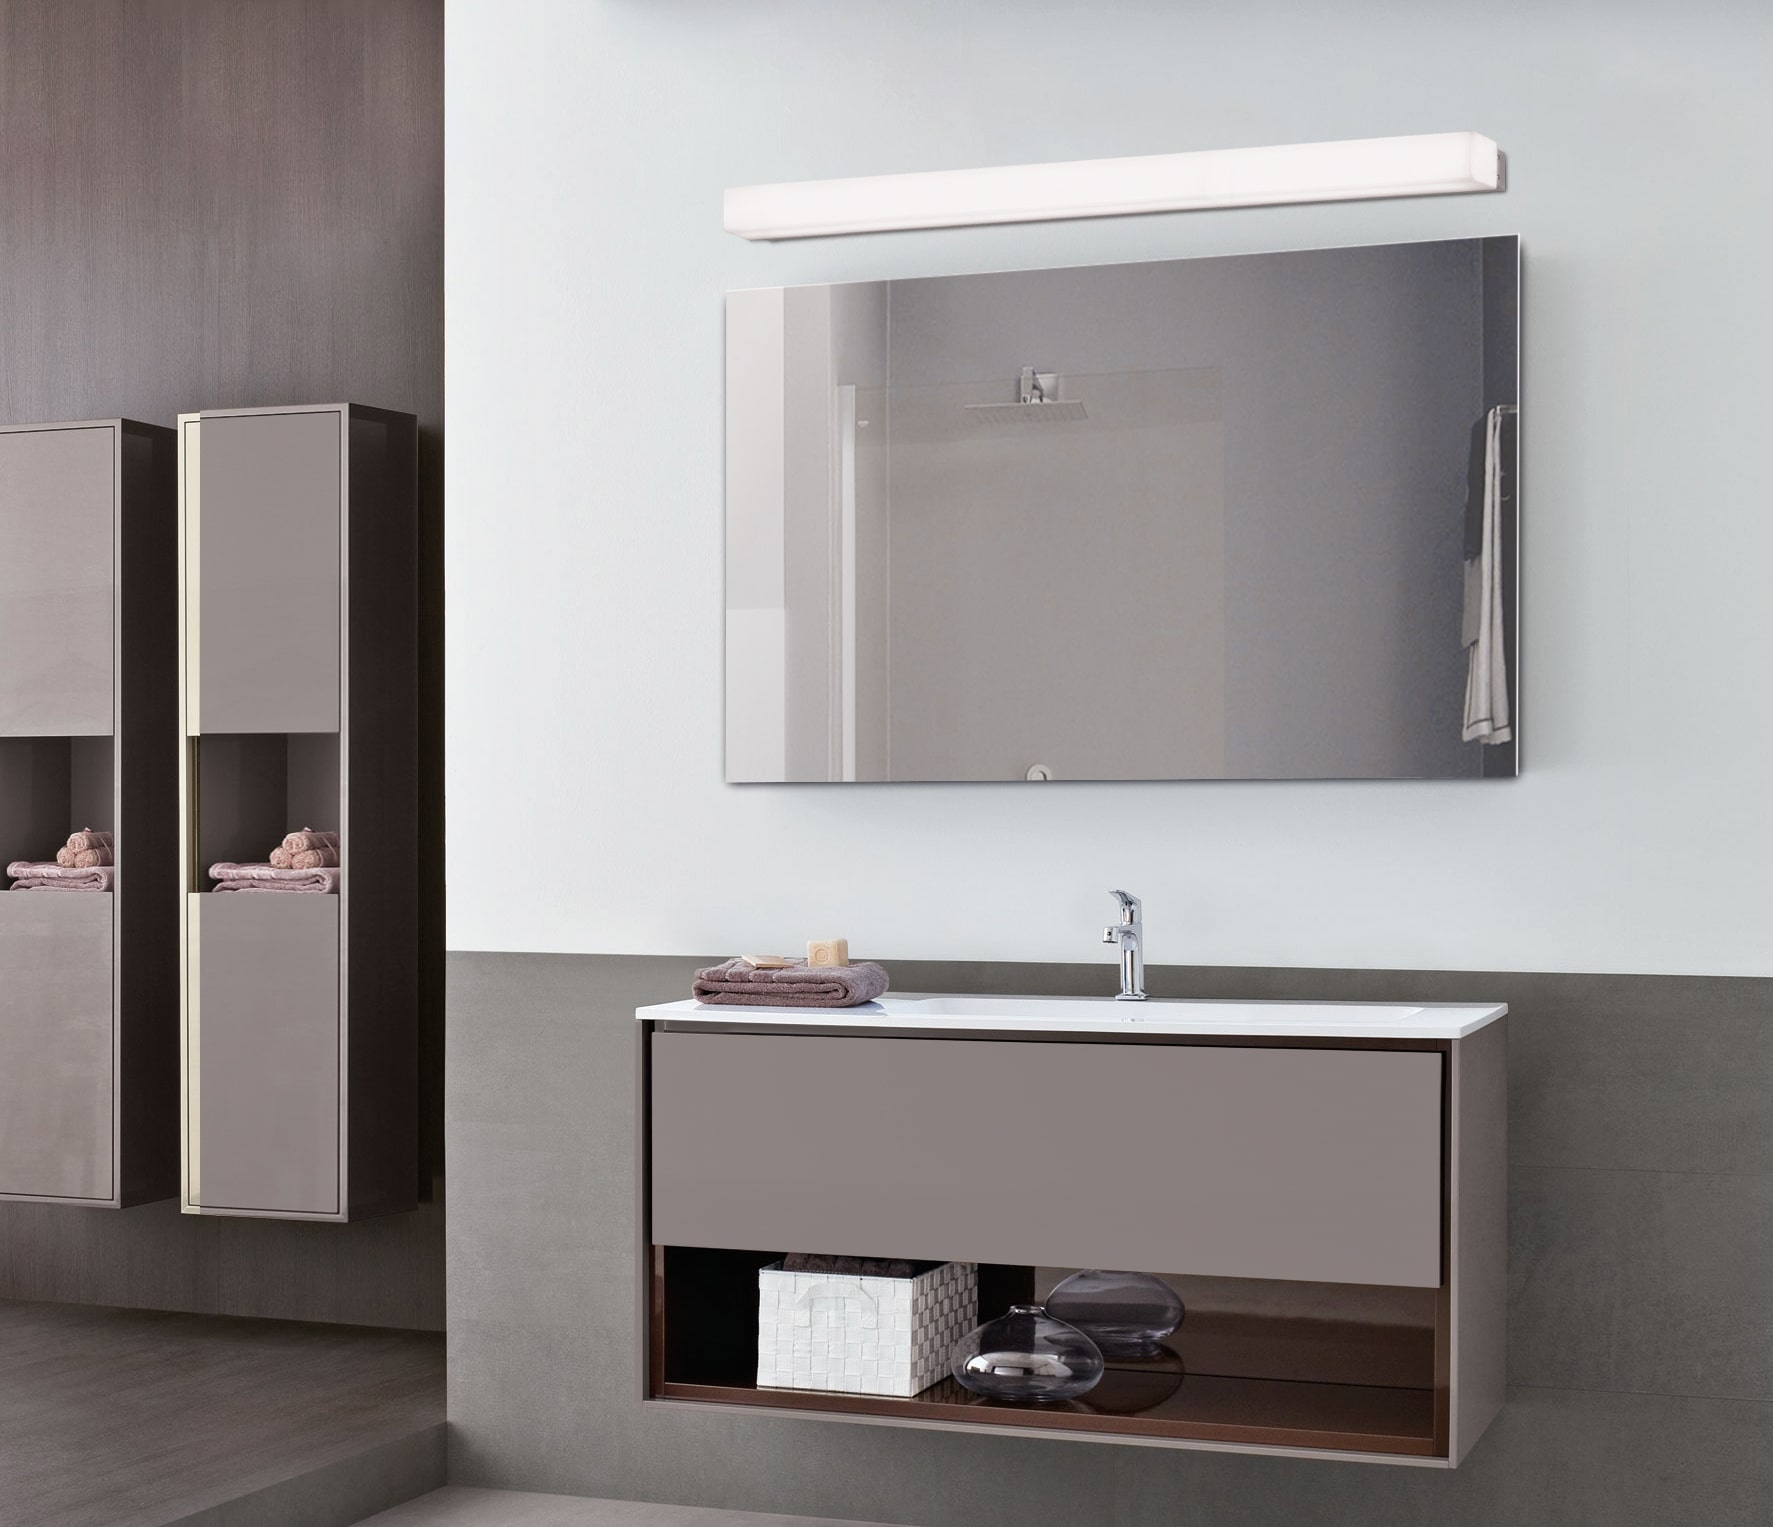 Furniture Luxury Wall Mounted Bathroom Mirror With Modern regard